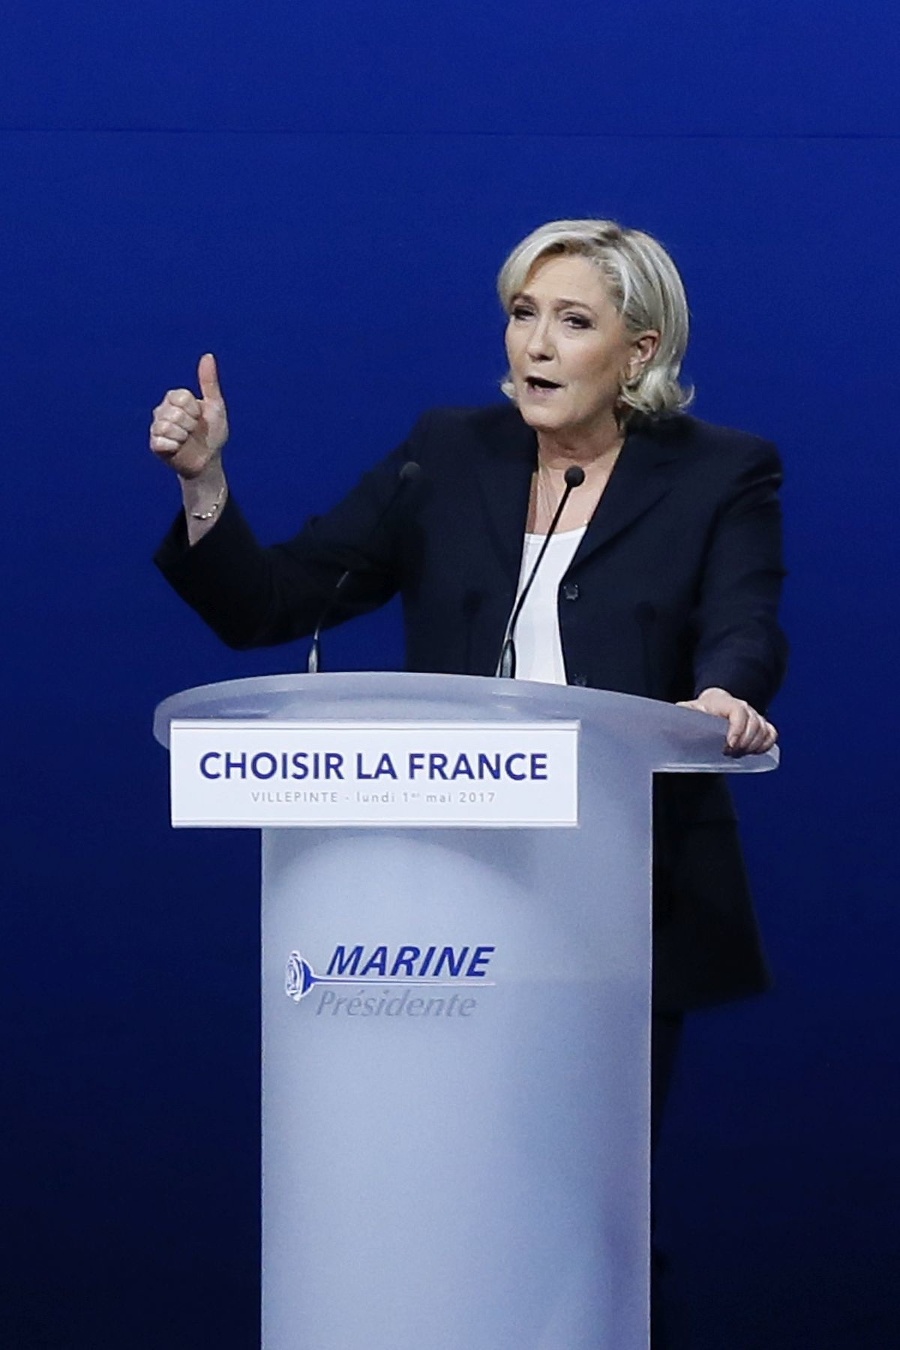 Marine Le Penová 